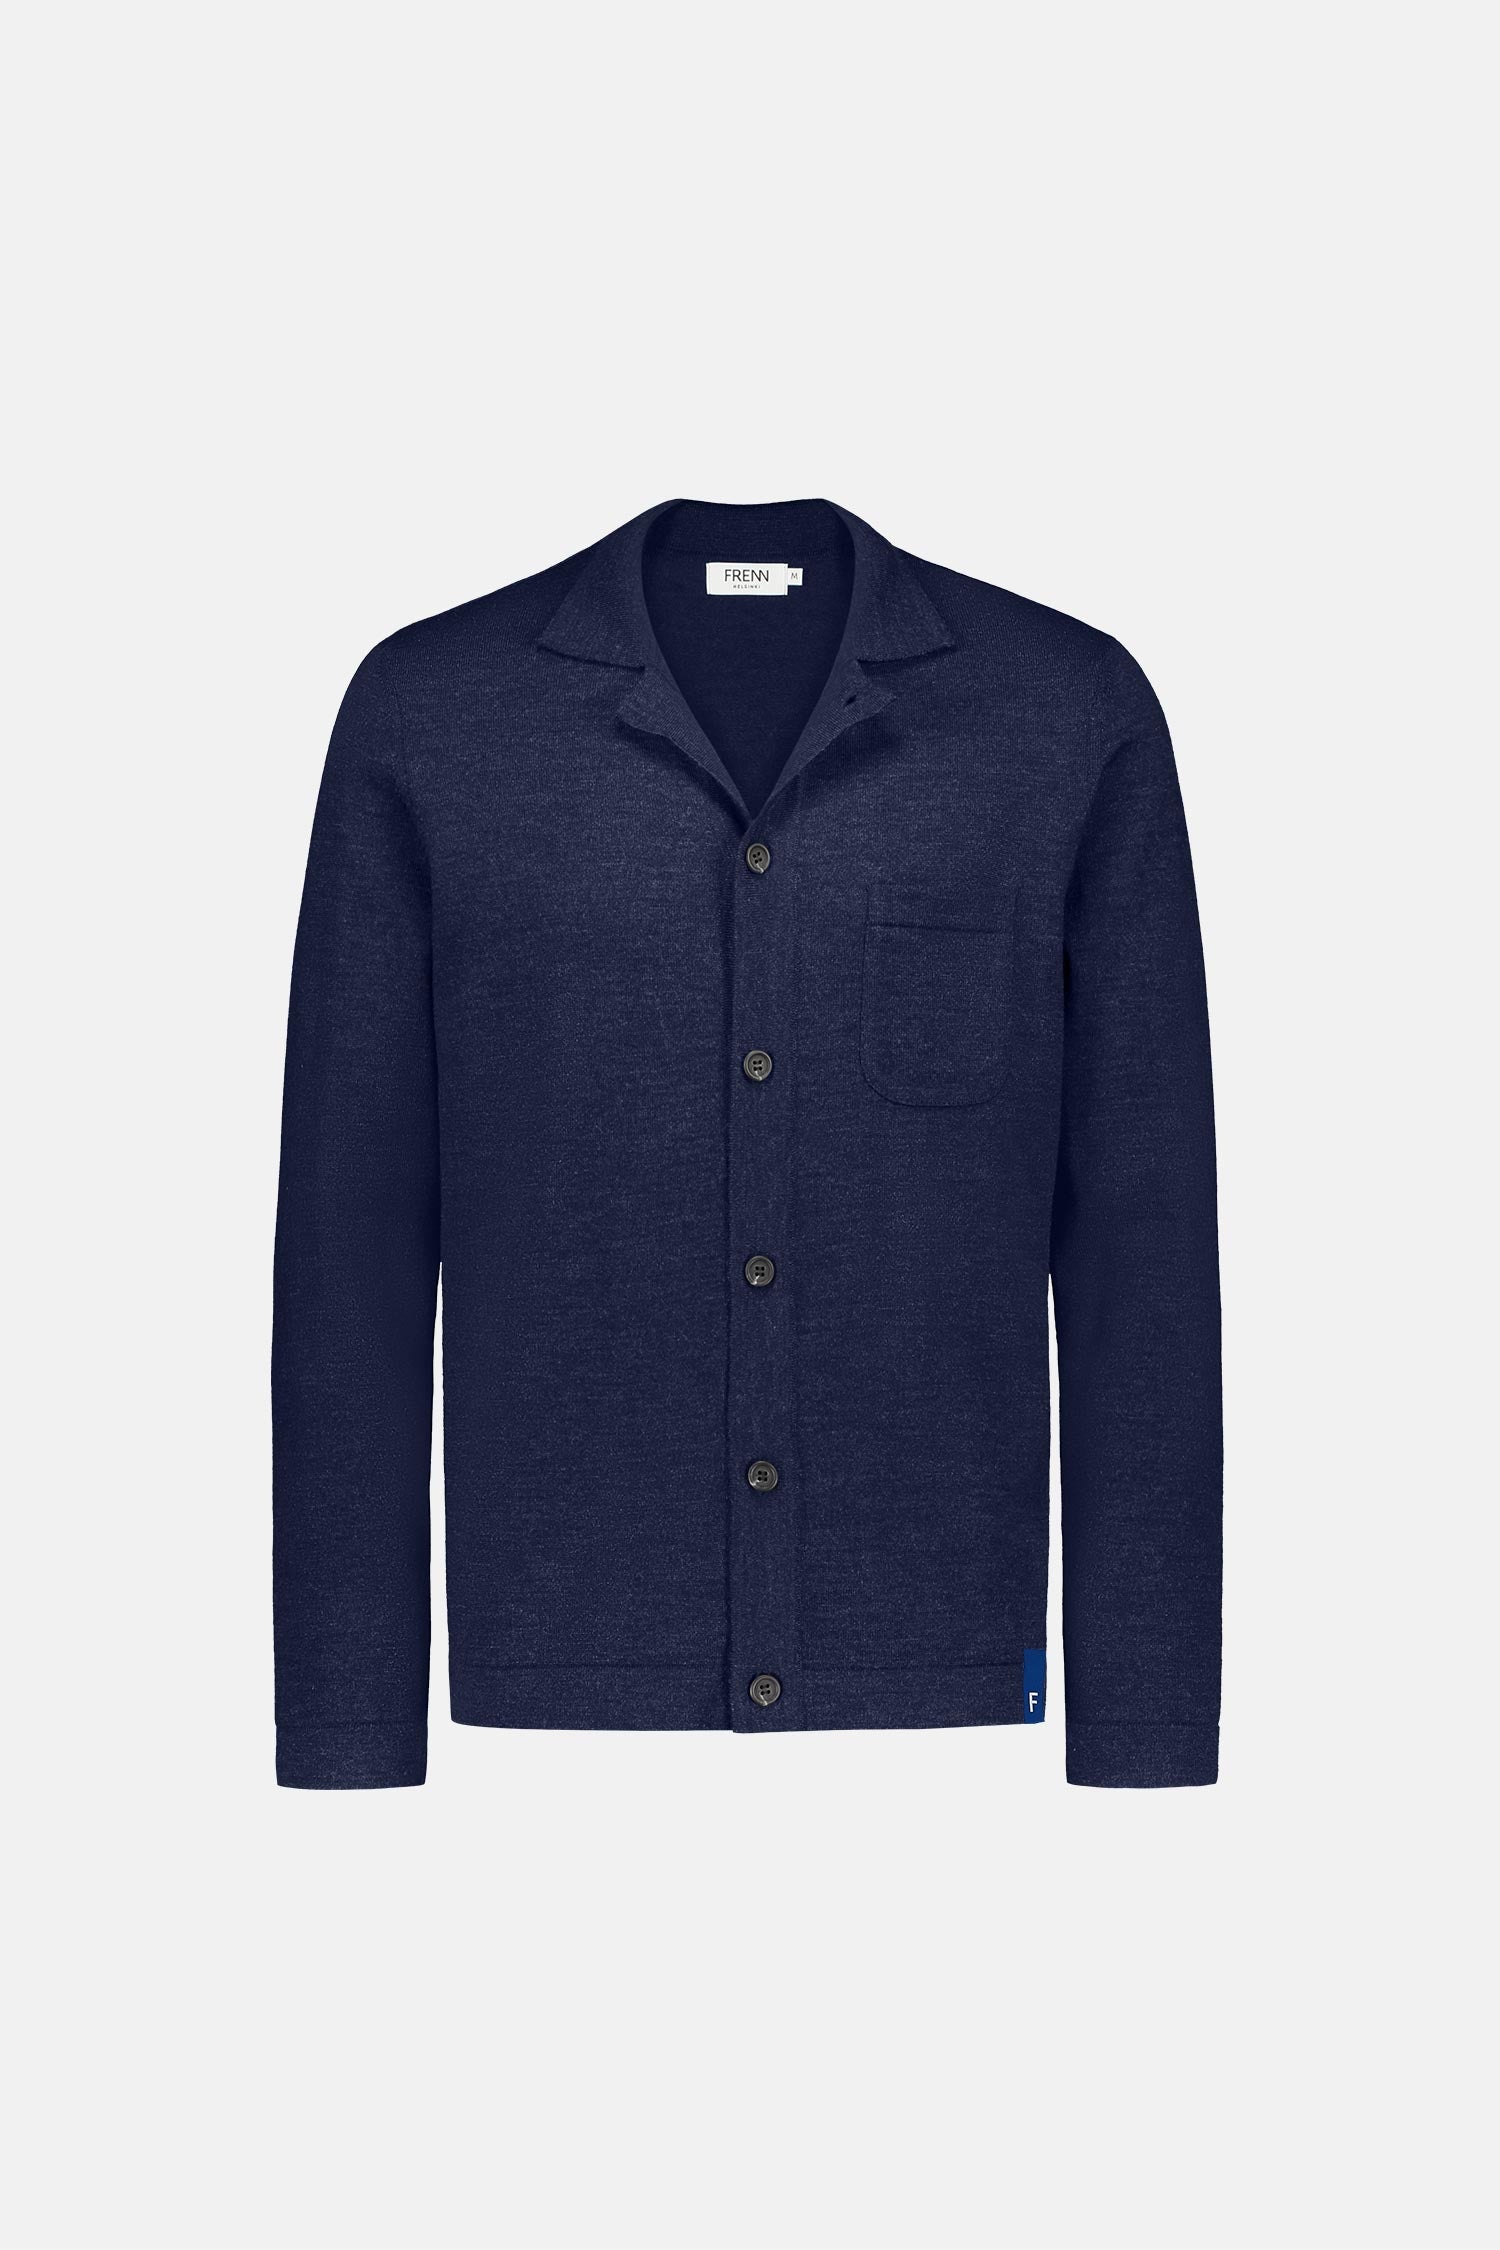 Frenn Eero sustainable premium quality extra fine merino wool knitted shirt blue